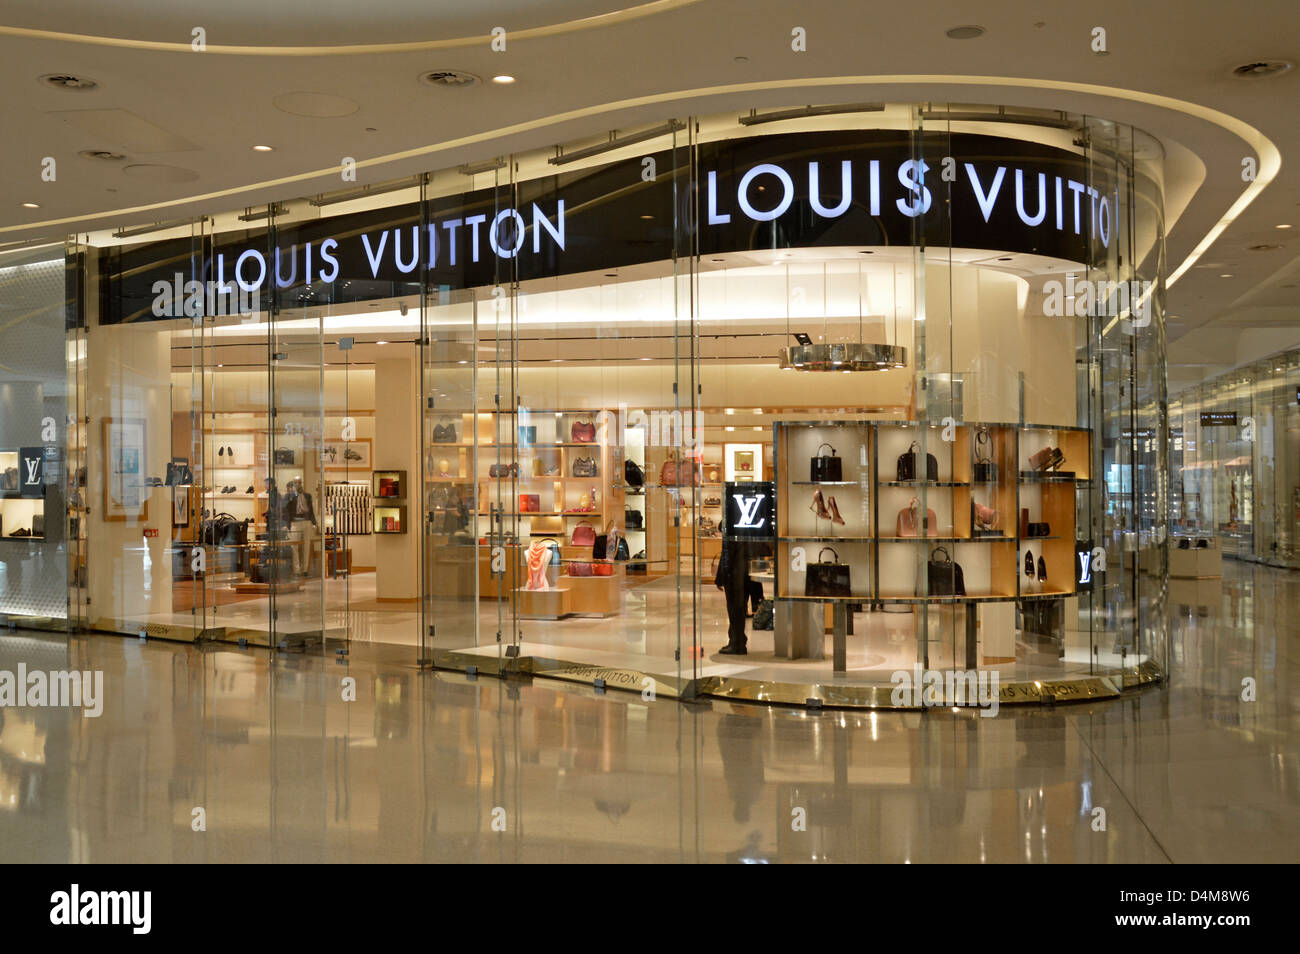 Louis Vuitton Outlet Oklahoma | The Art of Mike Mignola